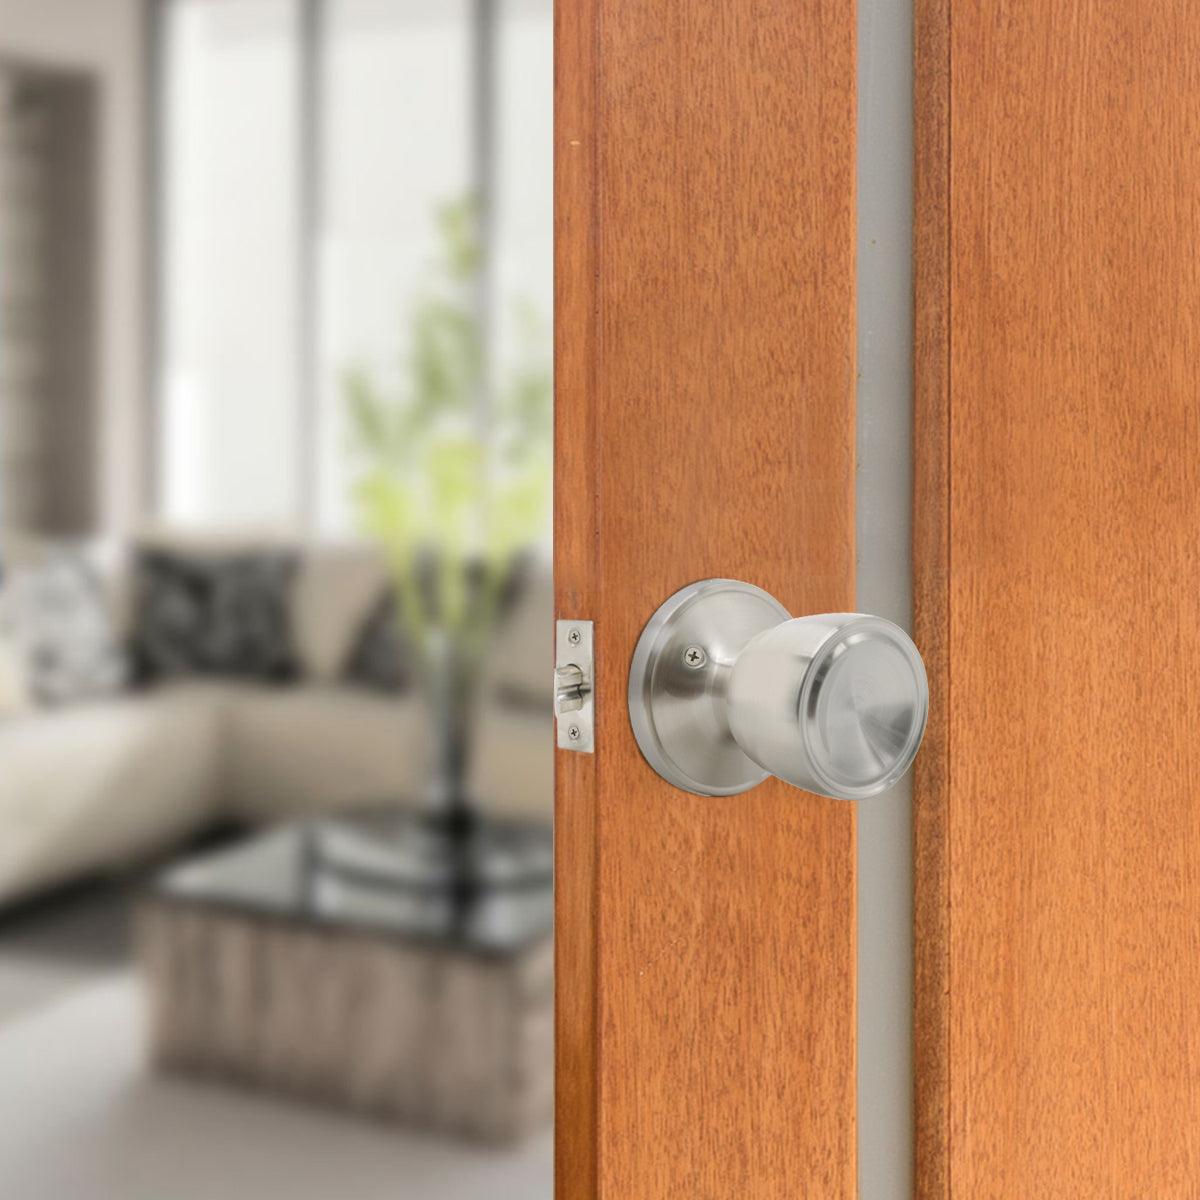 Tulip Style Door Knob Dummy/Privacy/Passage/Entry Keyed Door Lock Knobs Satin Nickel Finish DL591SN - Probrico